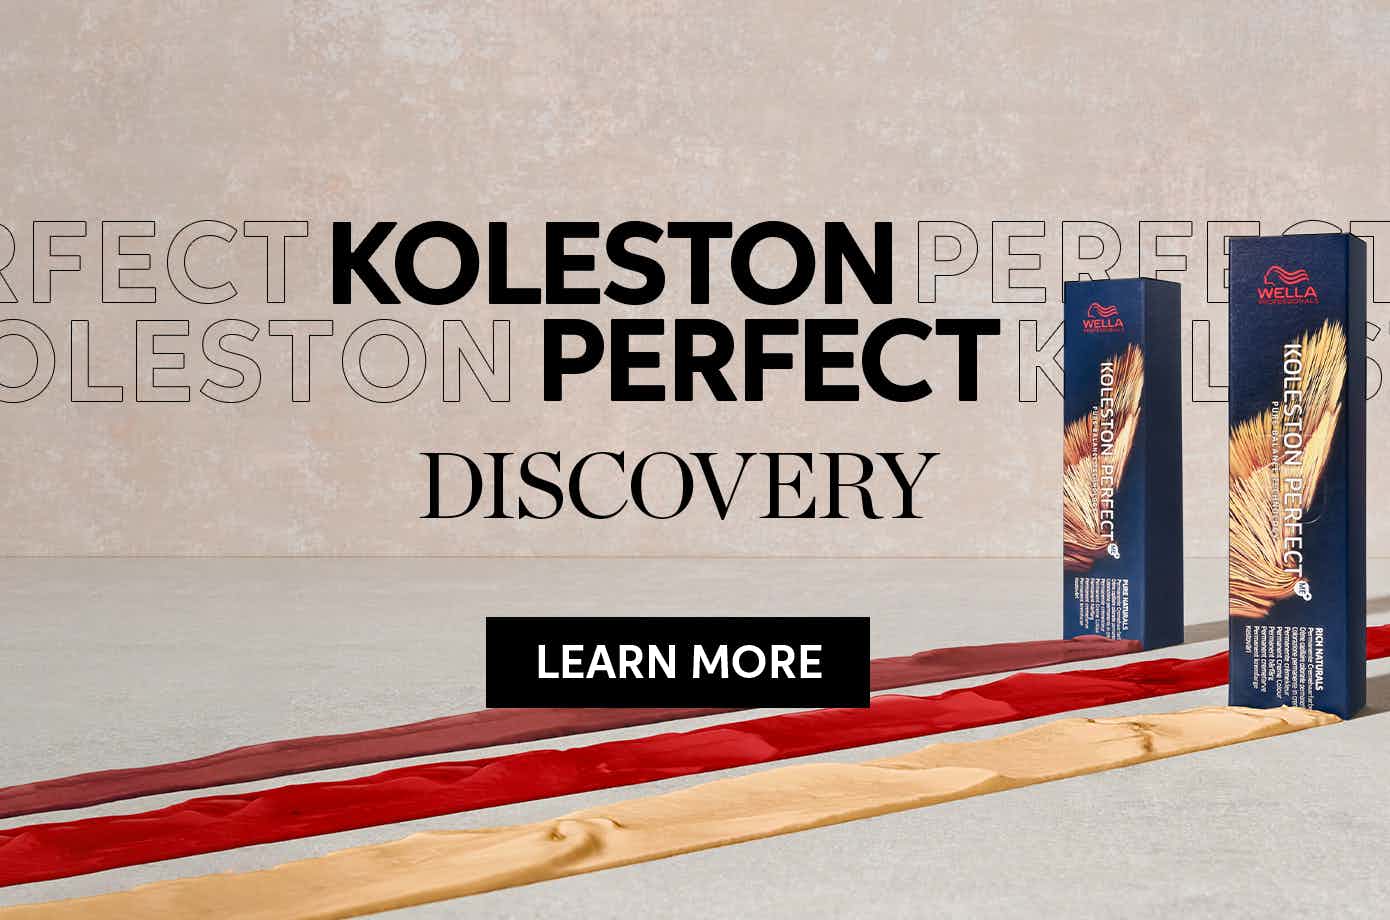 Koleston Perfect Discovery